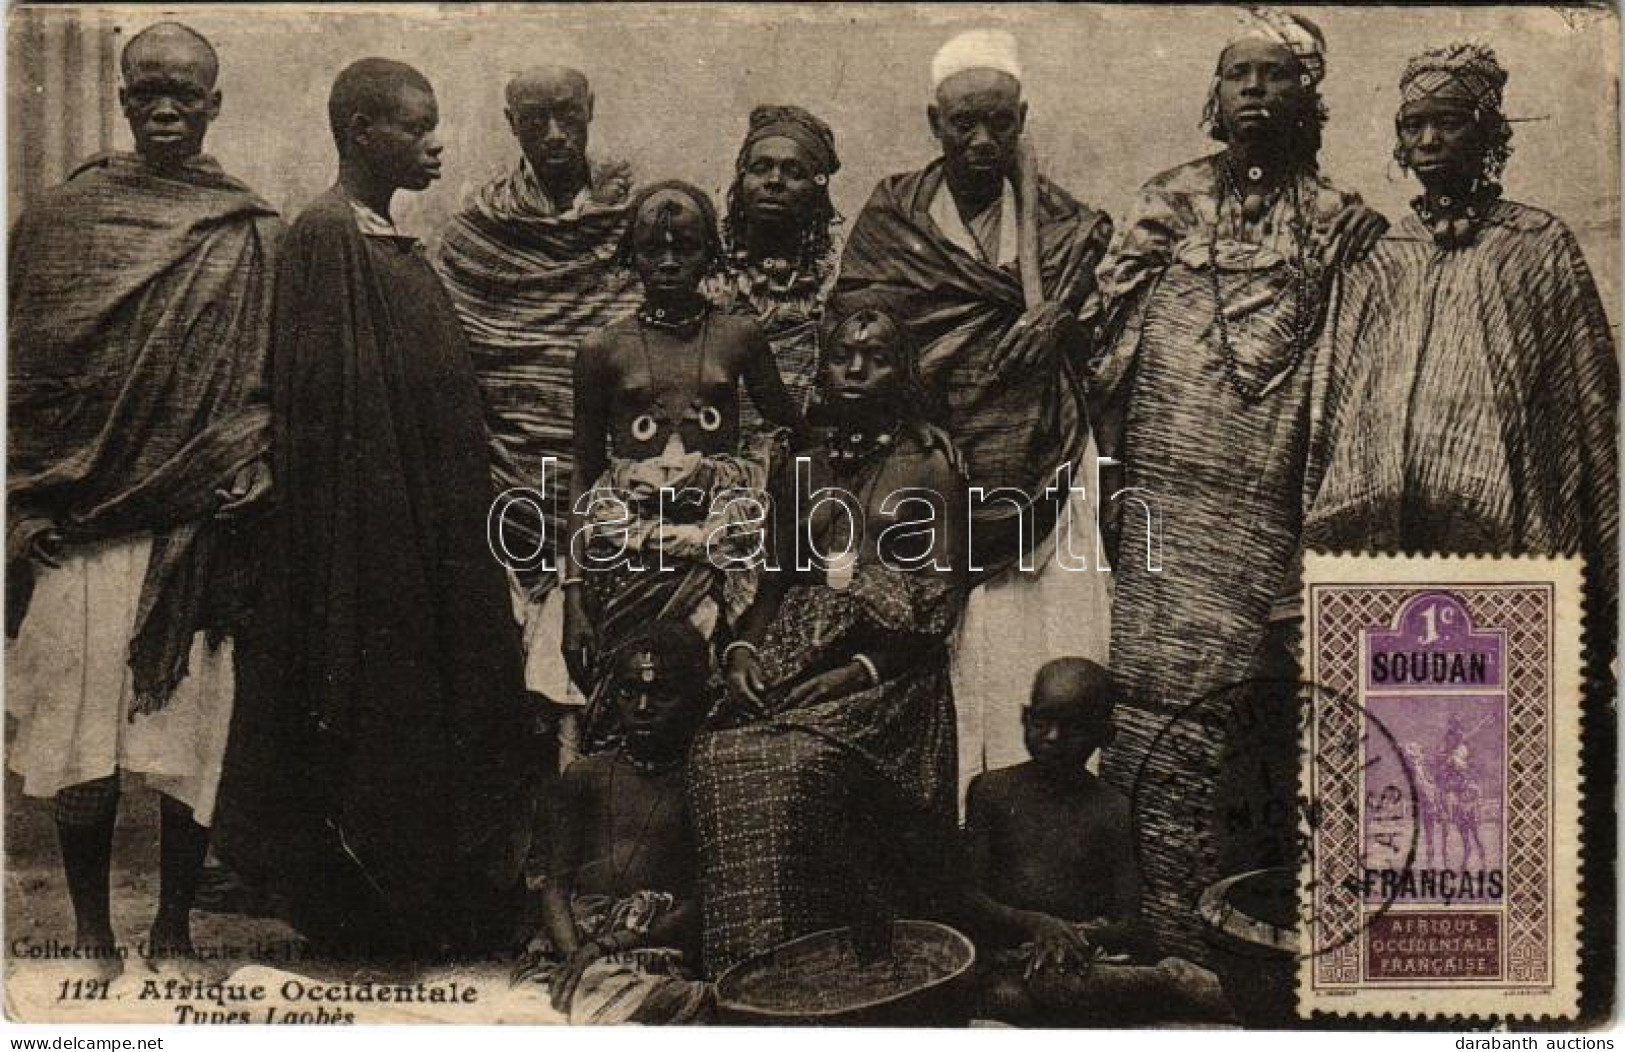 * T2/T3 Afrique Occidentale, Types Laobes / African Folklore, Ethnic Group From Senegal, Half-naked Women (EK) - Zonder Classificatie